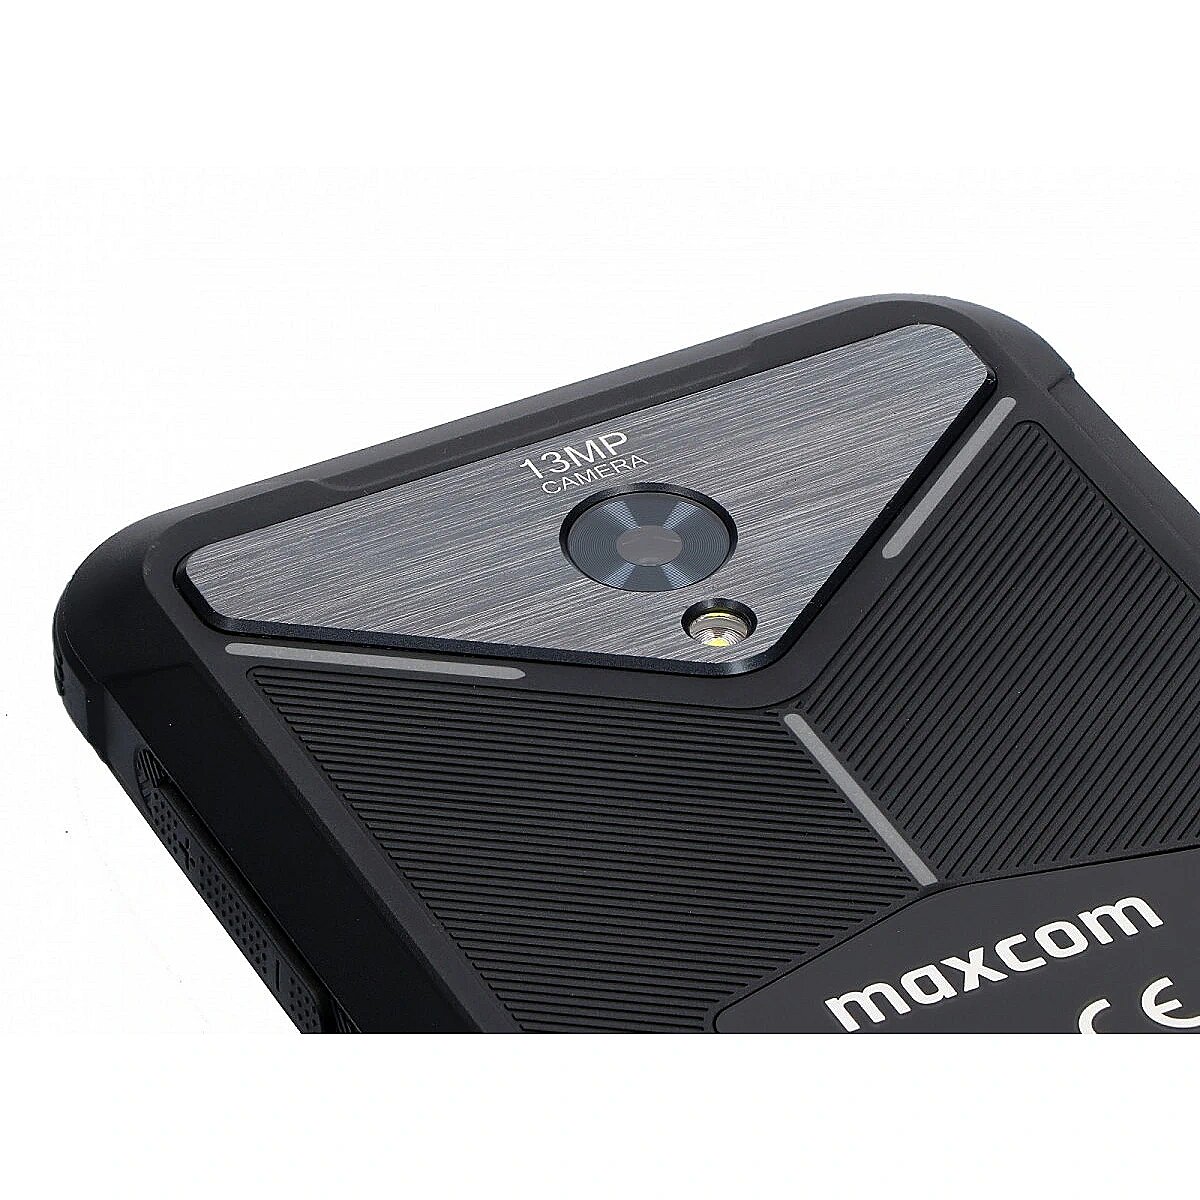 MAXCOM MS571 NEGRO ROJO MÓVIL RUGERIZADO 3G IP68 DUAL SIM 5.7''  4CORE/32GB/3GB RAM/13+0.3MP/5MP BLUETOOTH NFC